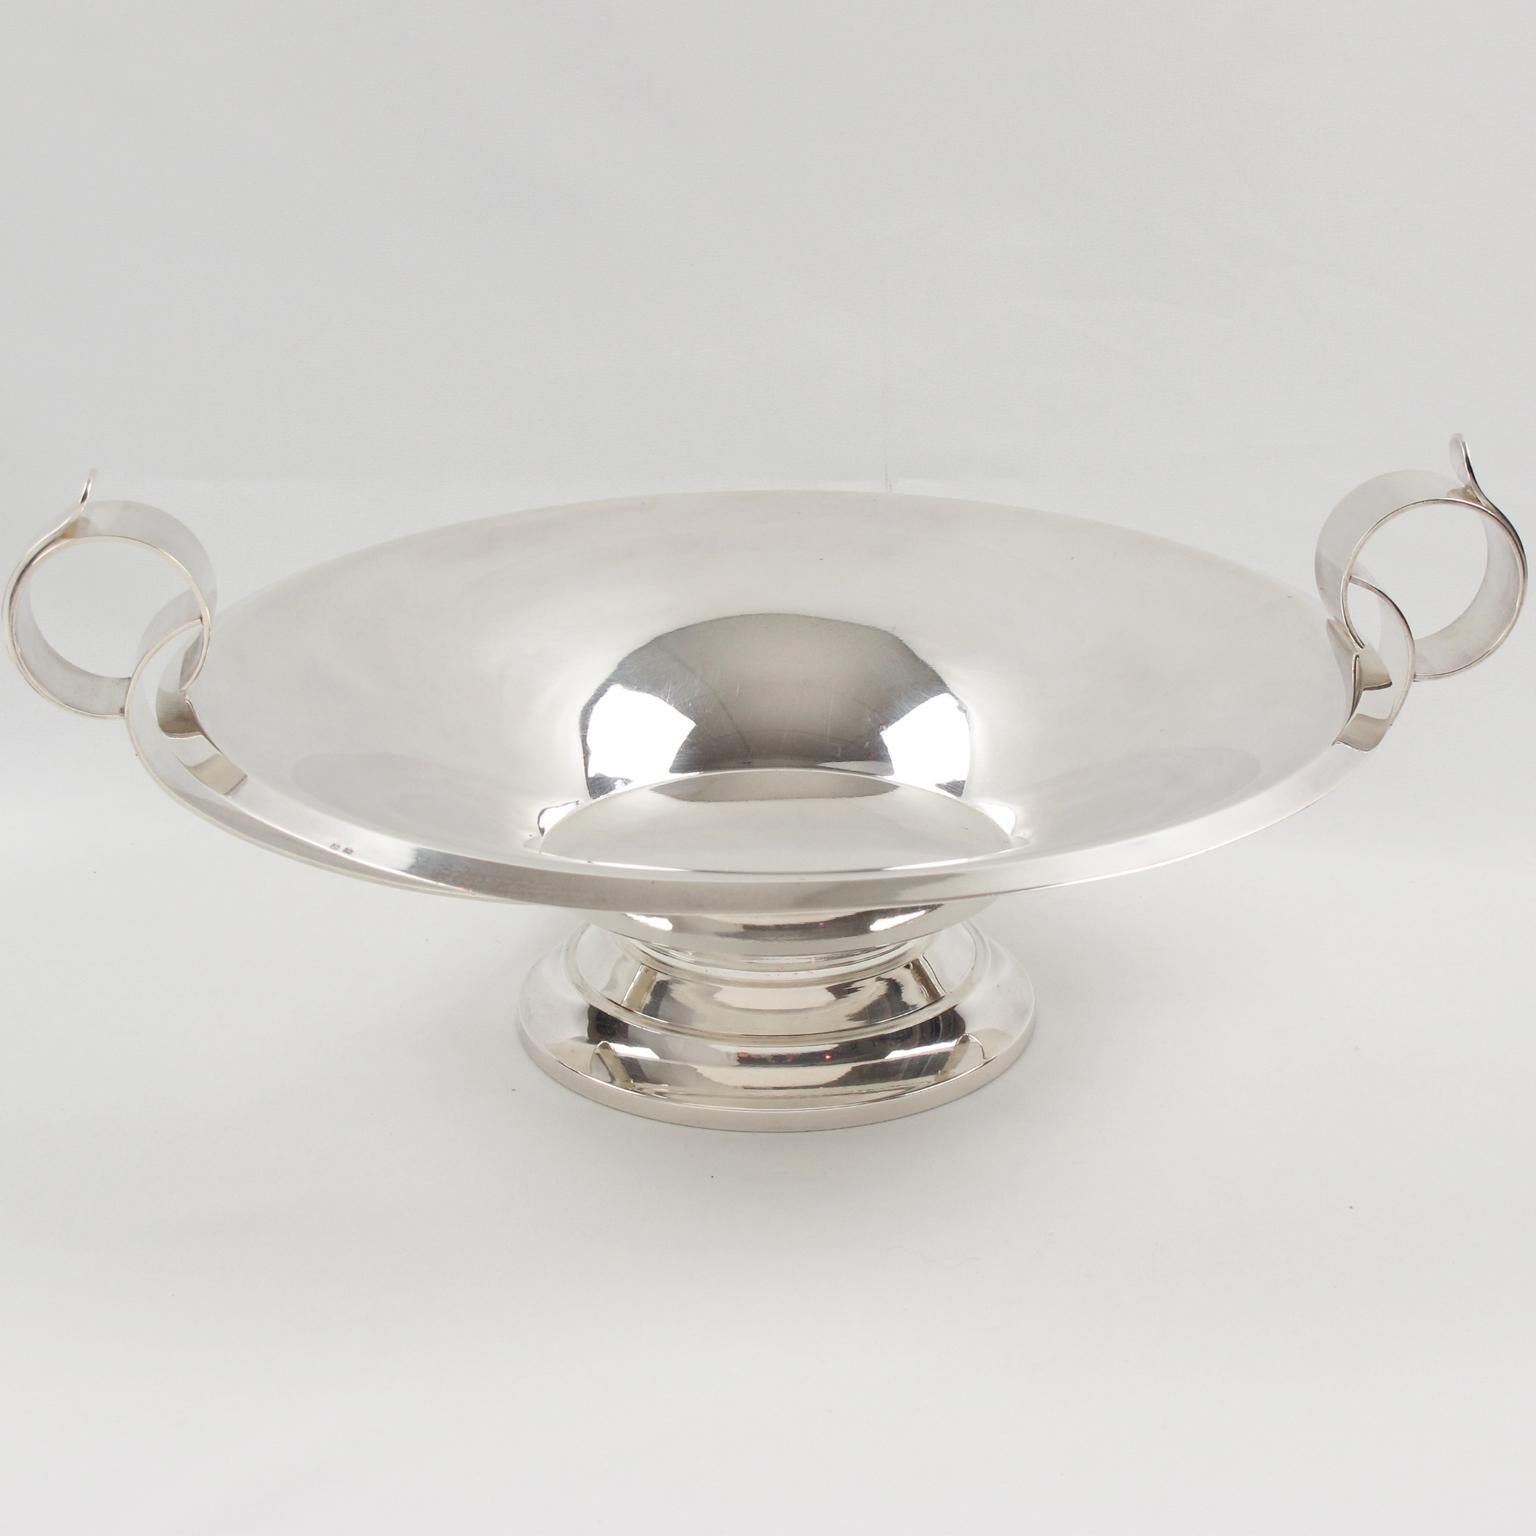 Art Deco Silver Plate Decorative Bowl Centerpiece, France 1930s In Good Condition For Sale In Atlanta, GA